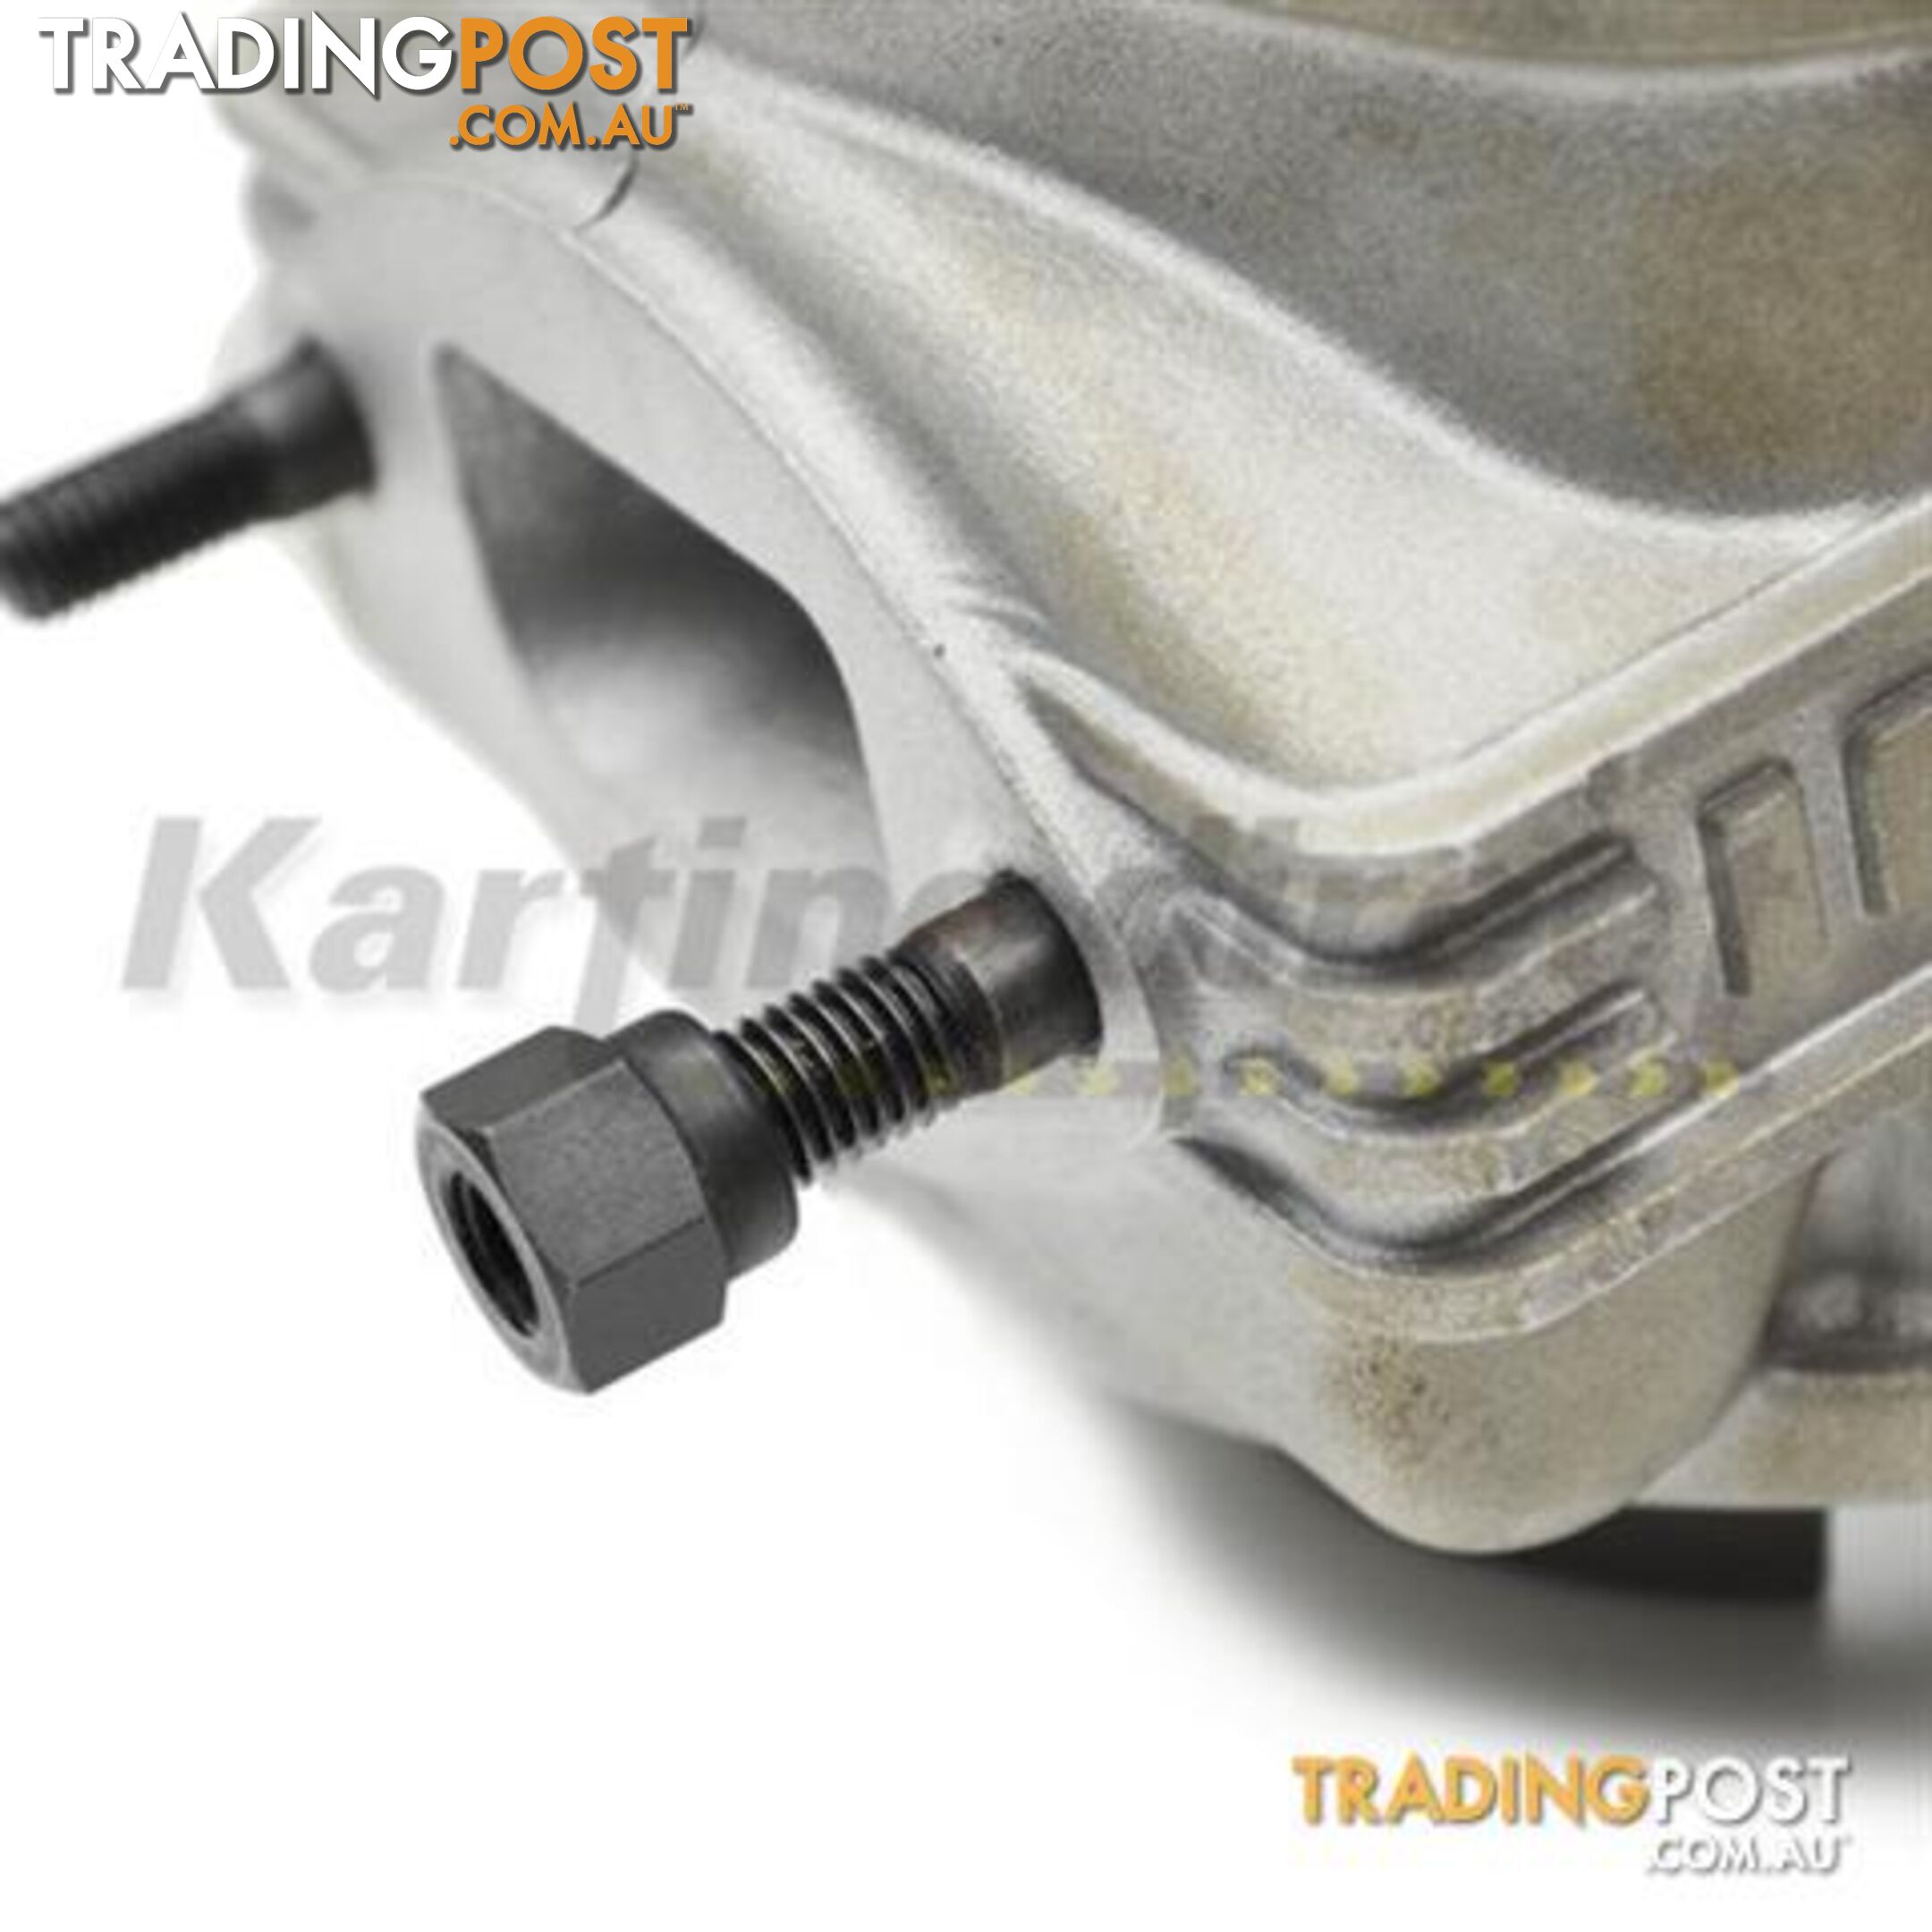 Go Kart X30 M8 Exhaust NUT      IAME Part No.: B-71662 - ALL BRAND NEW !!!